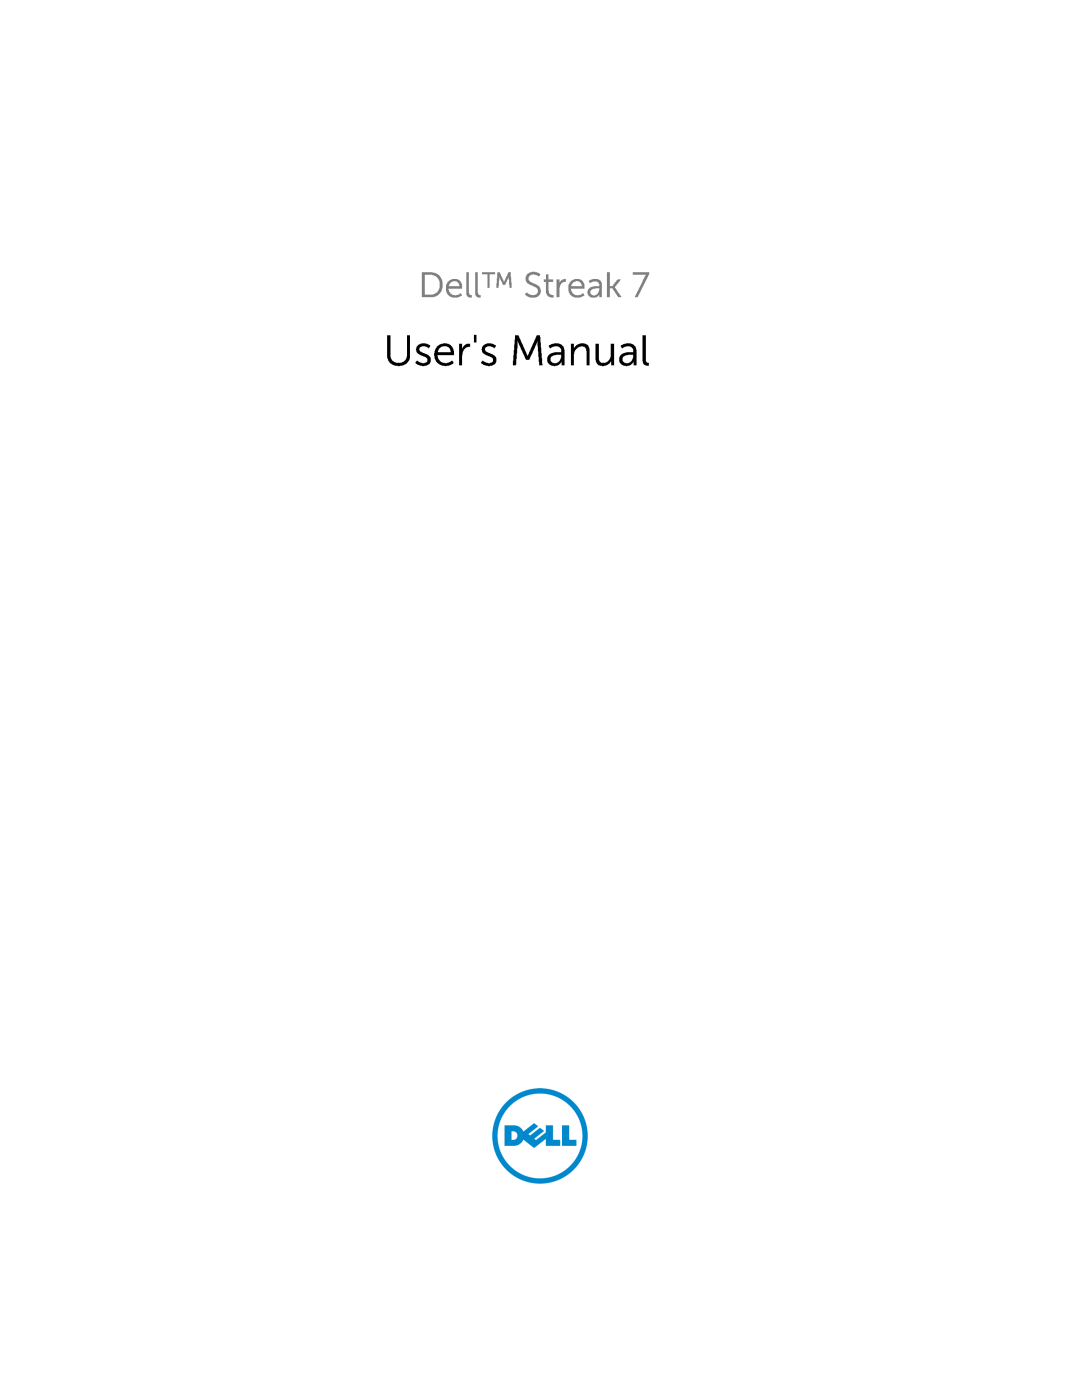 Dell 7 user manual Users Manual, Dell Streak, Comment 